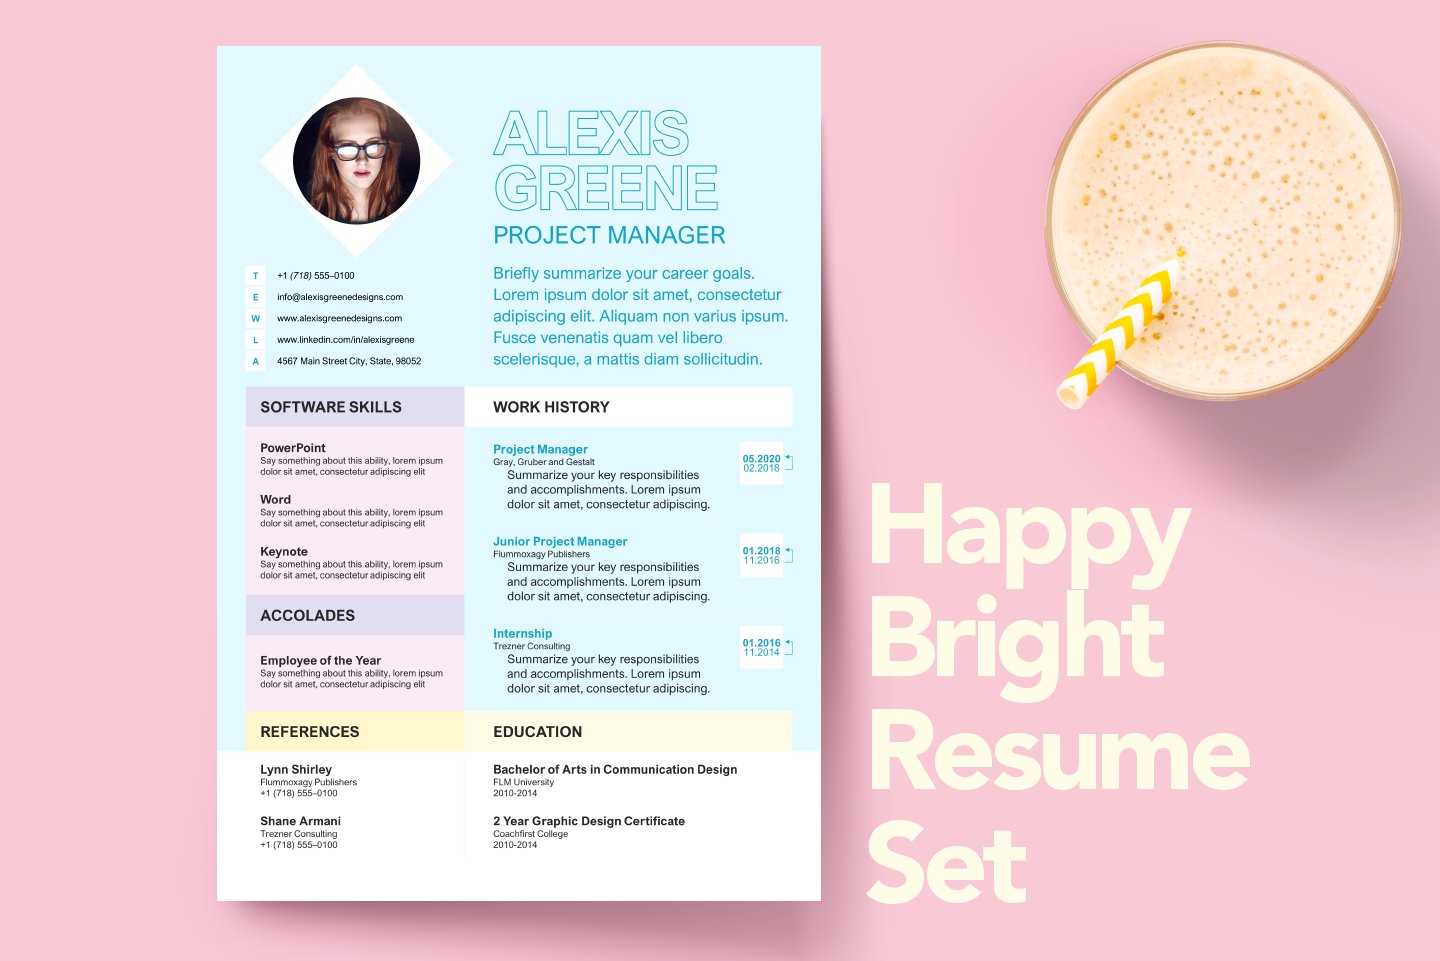 Happy Bright Resume Set cover image.